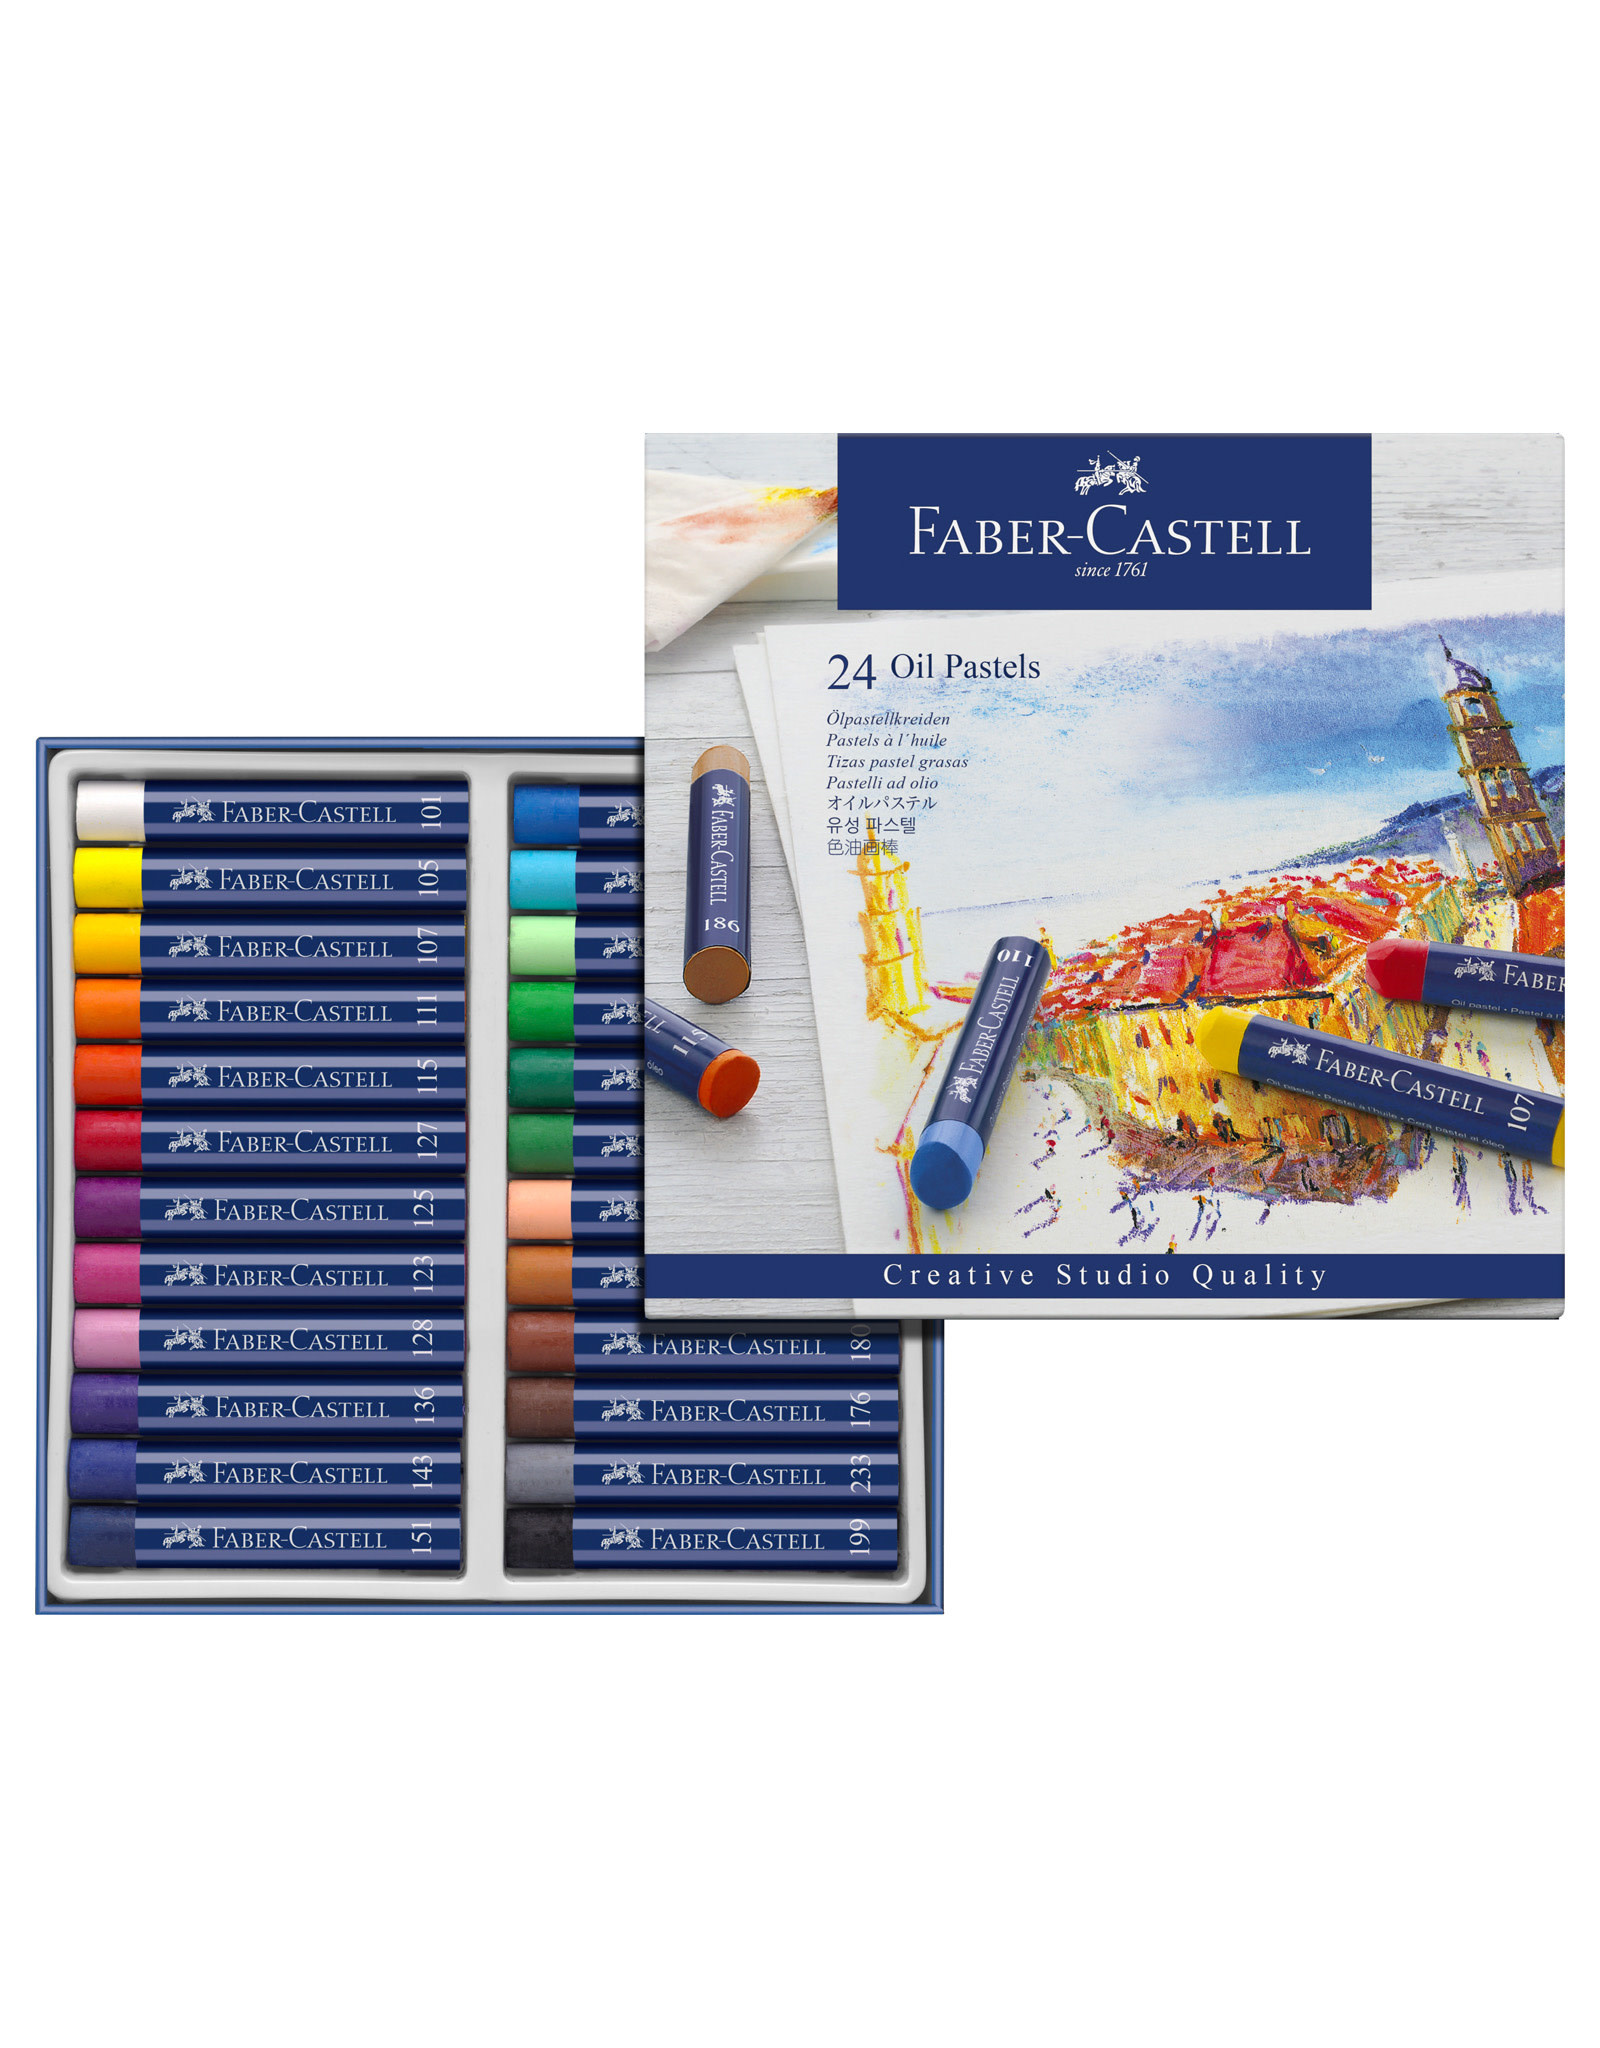 FABER-CASTELL Faber Castell Oil Pastels, Set of 24